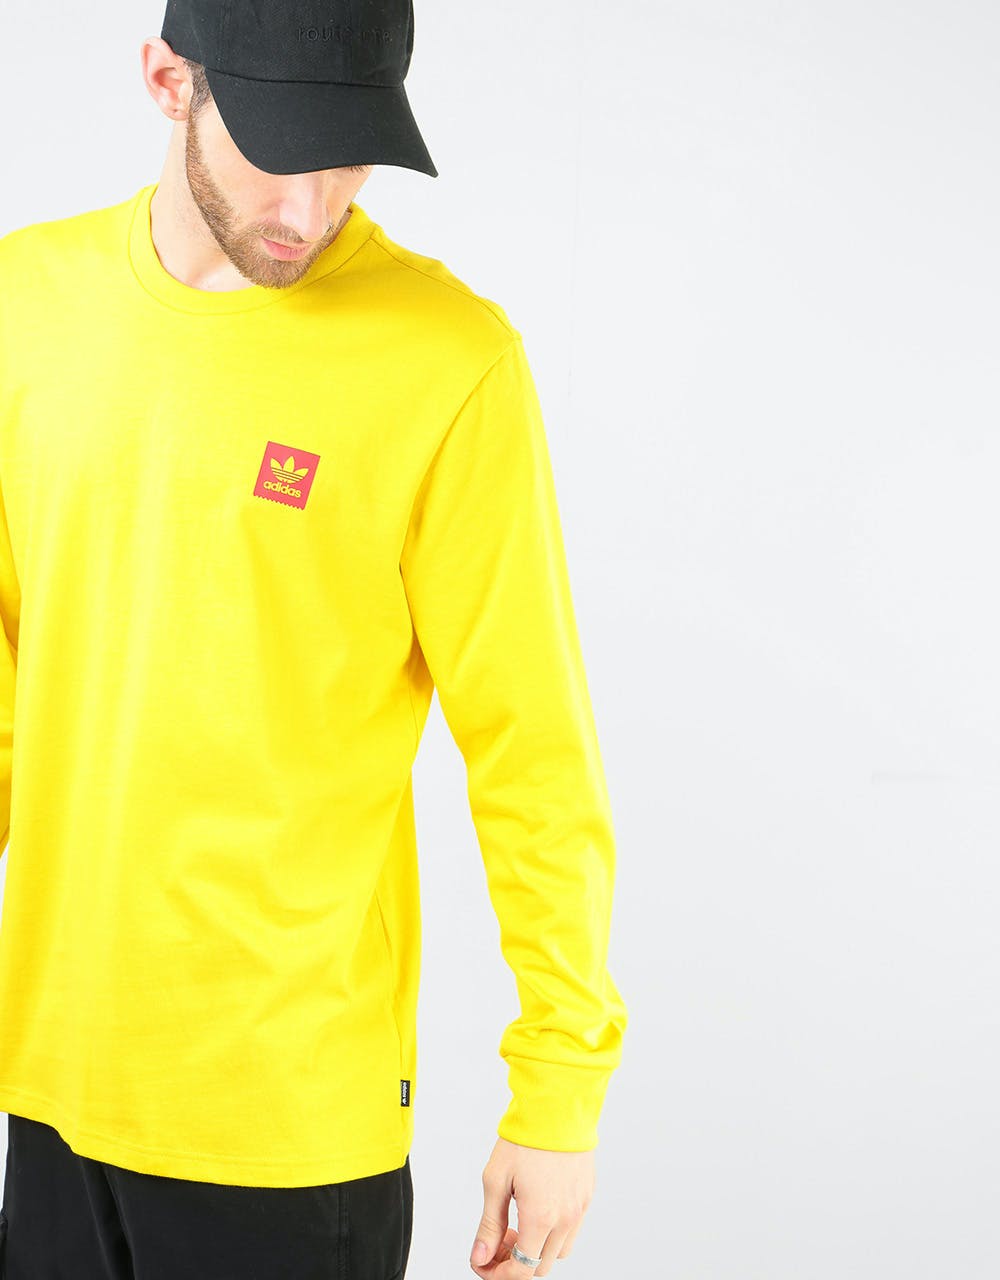 Adidas x Evisen L/S T-Shirt - Yellow/Scarlet